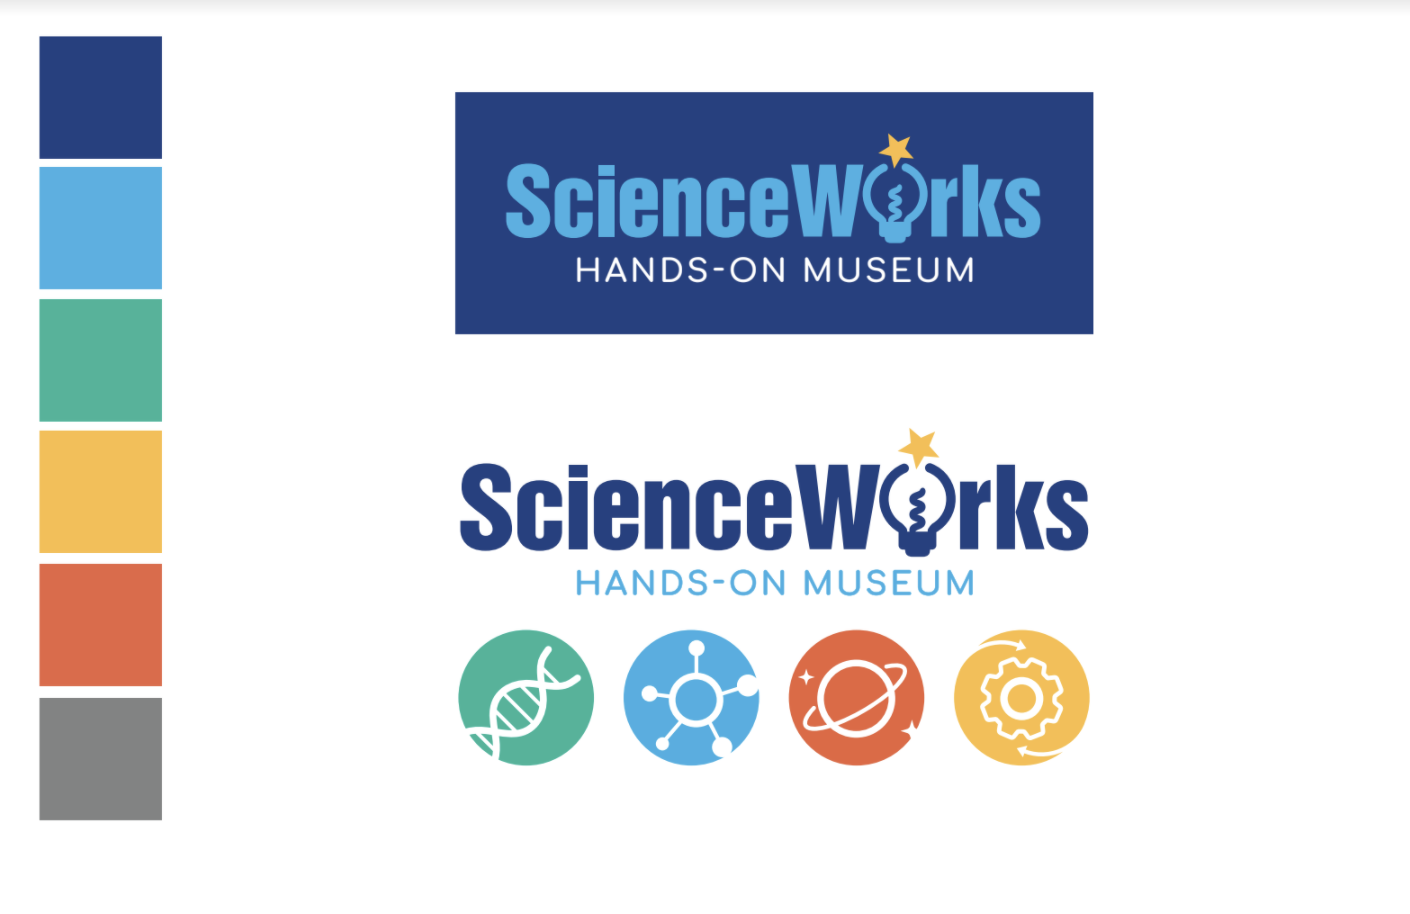 scienceworks branding guide